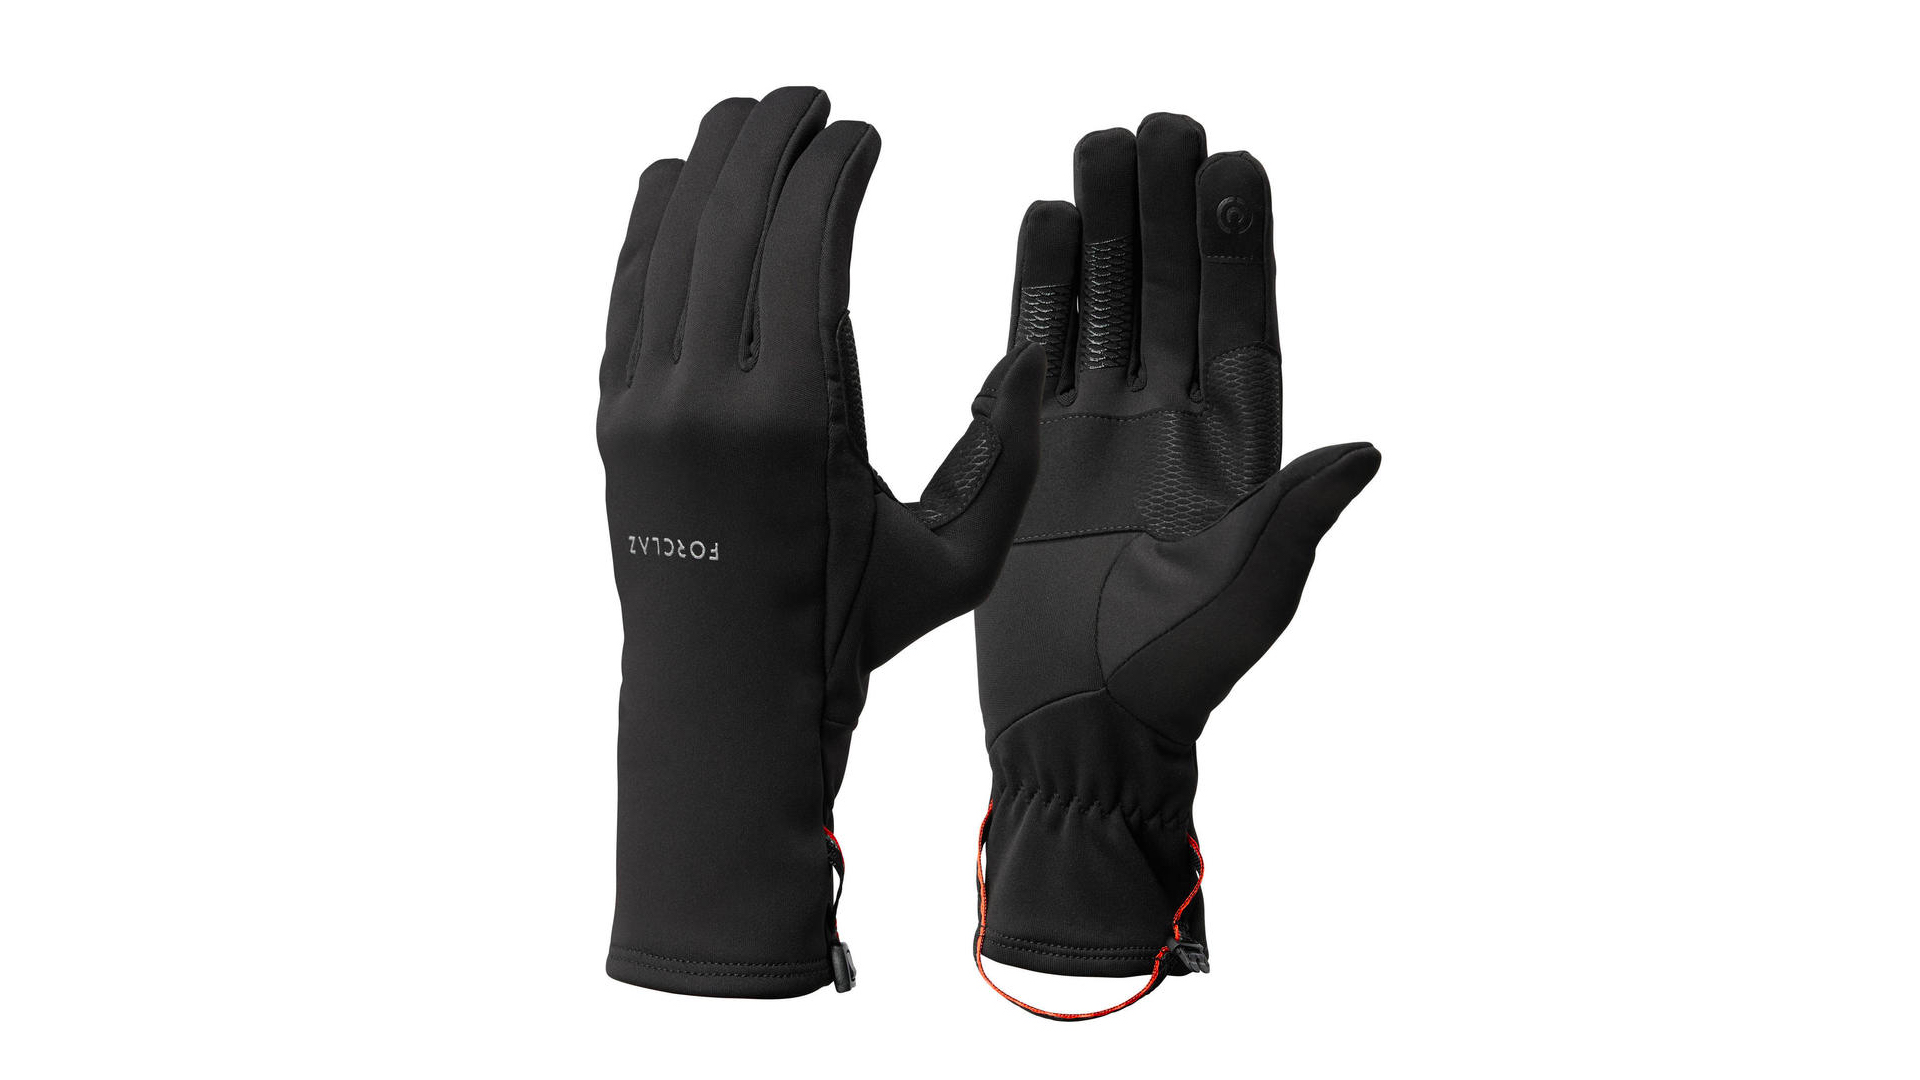 Forclaz Mountain Trek 500 gloves review | Advnture